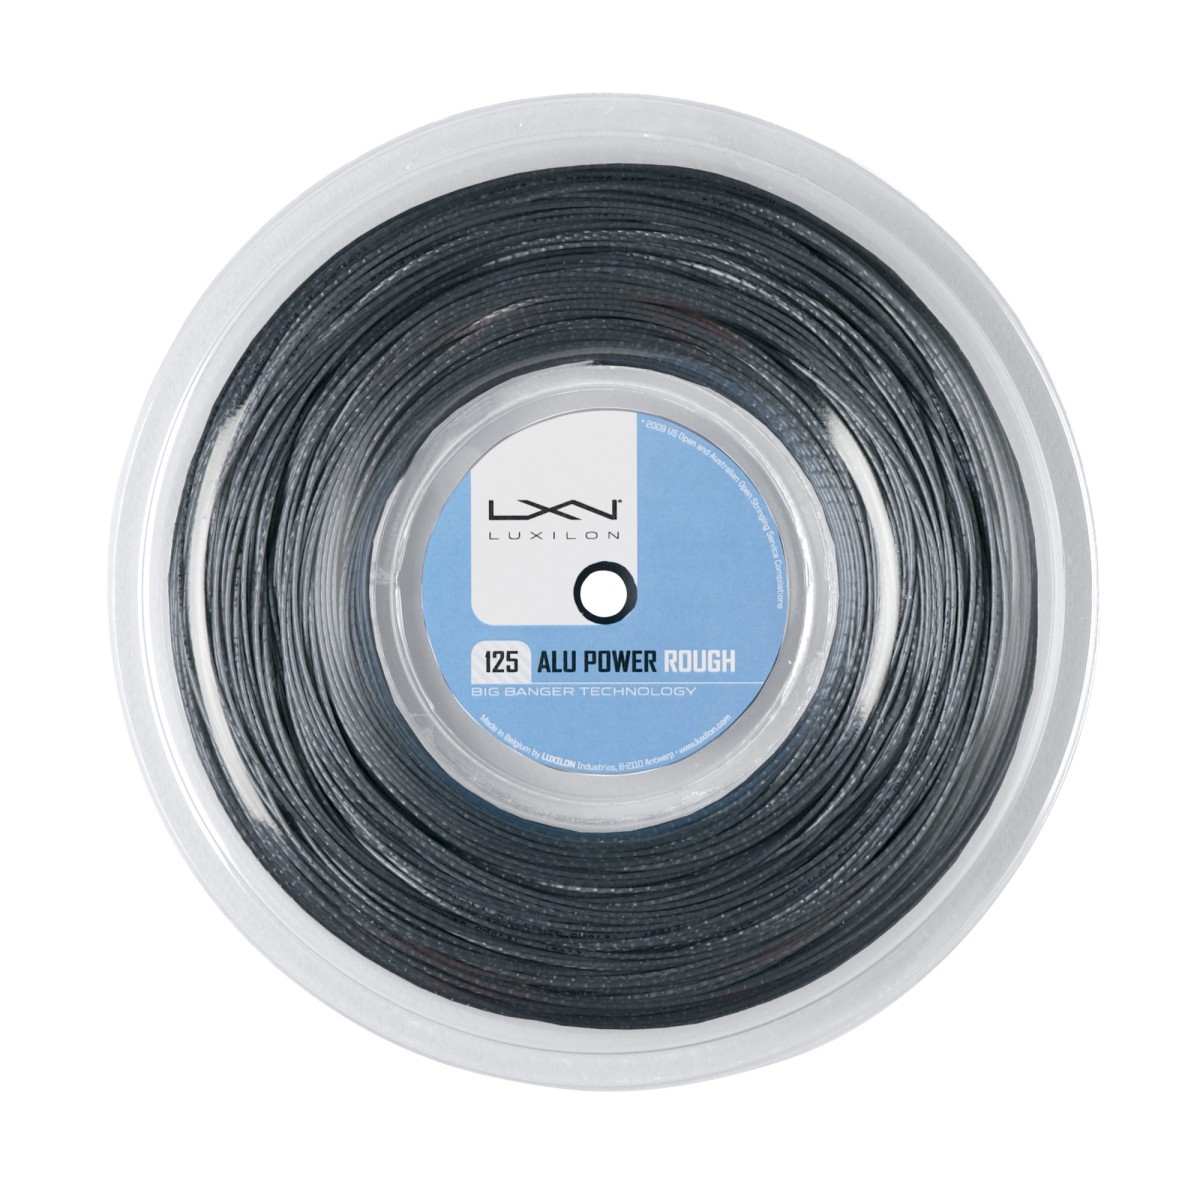 Luxilon ALU Power 125 Rough Tennis String Reel (220 m) – Silver, 16L GA (1.25mm)